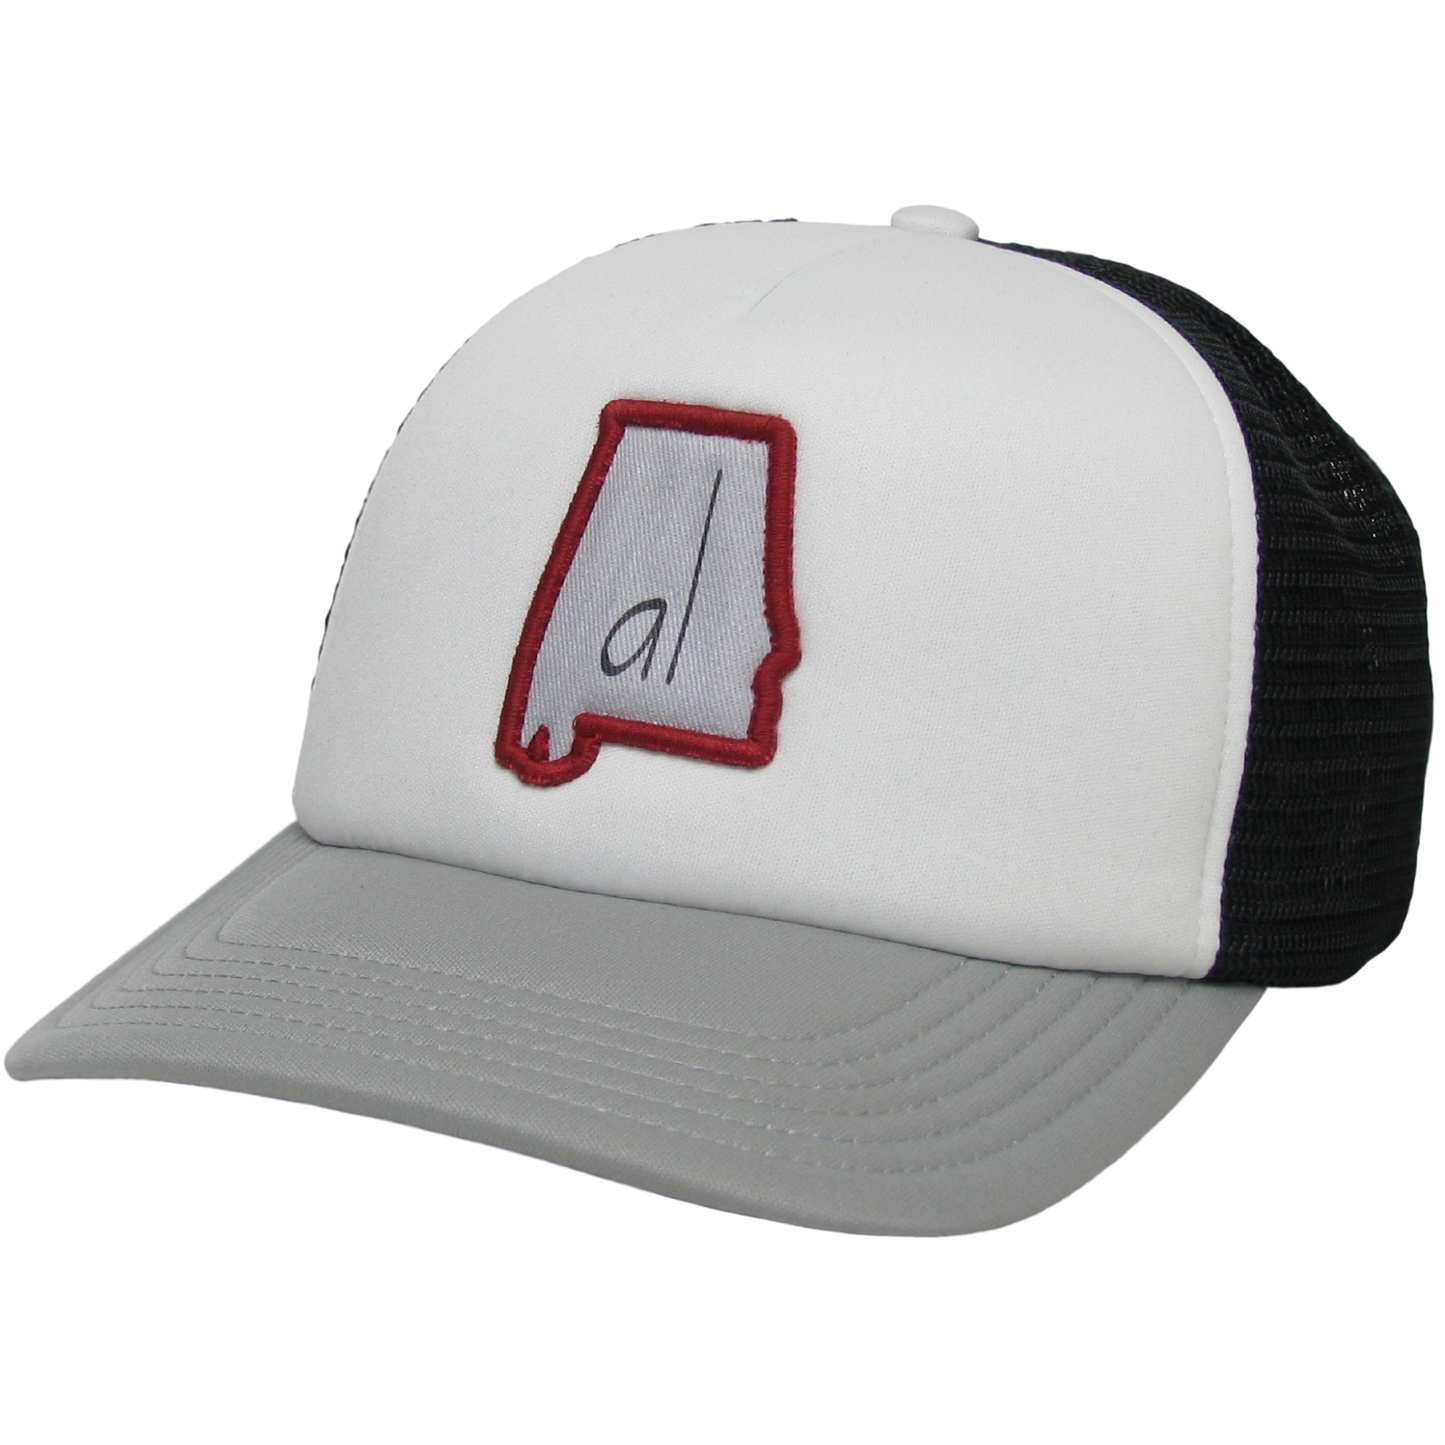 Alabama Laguna Trucker Hat in White/Light Grey/Black